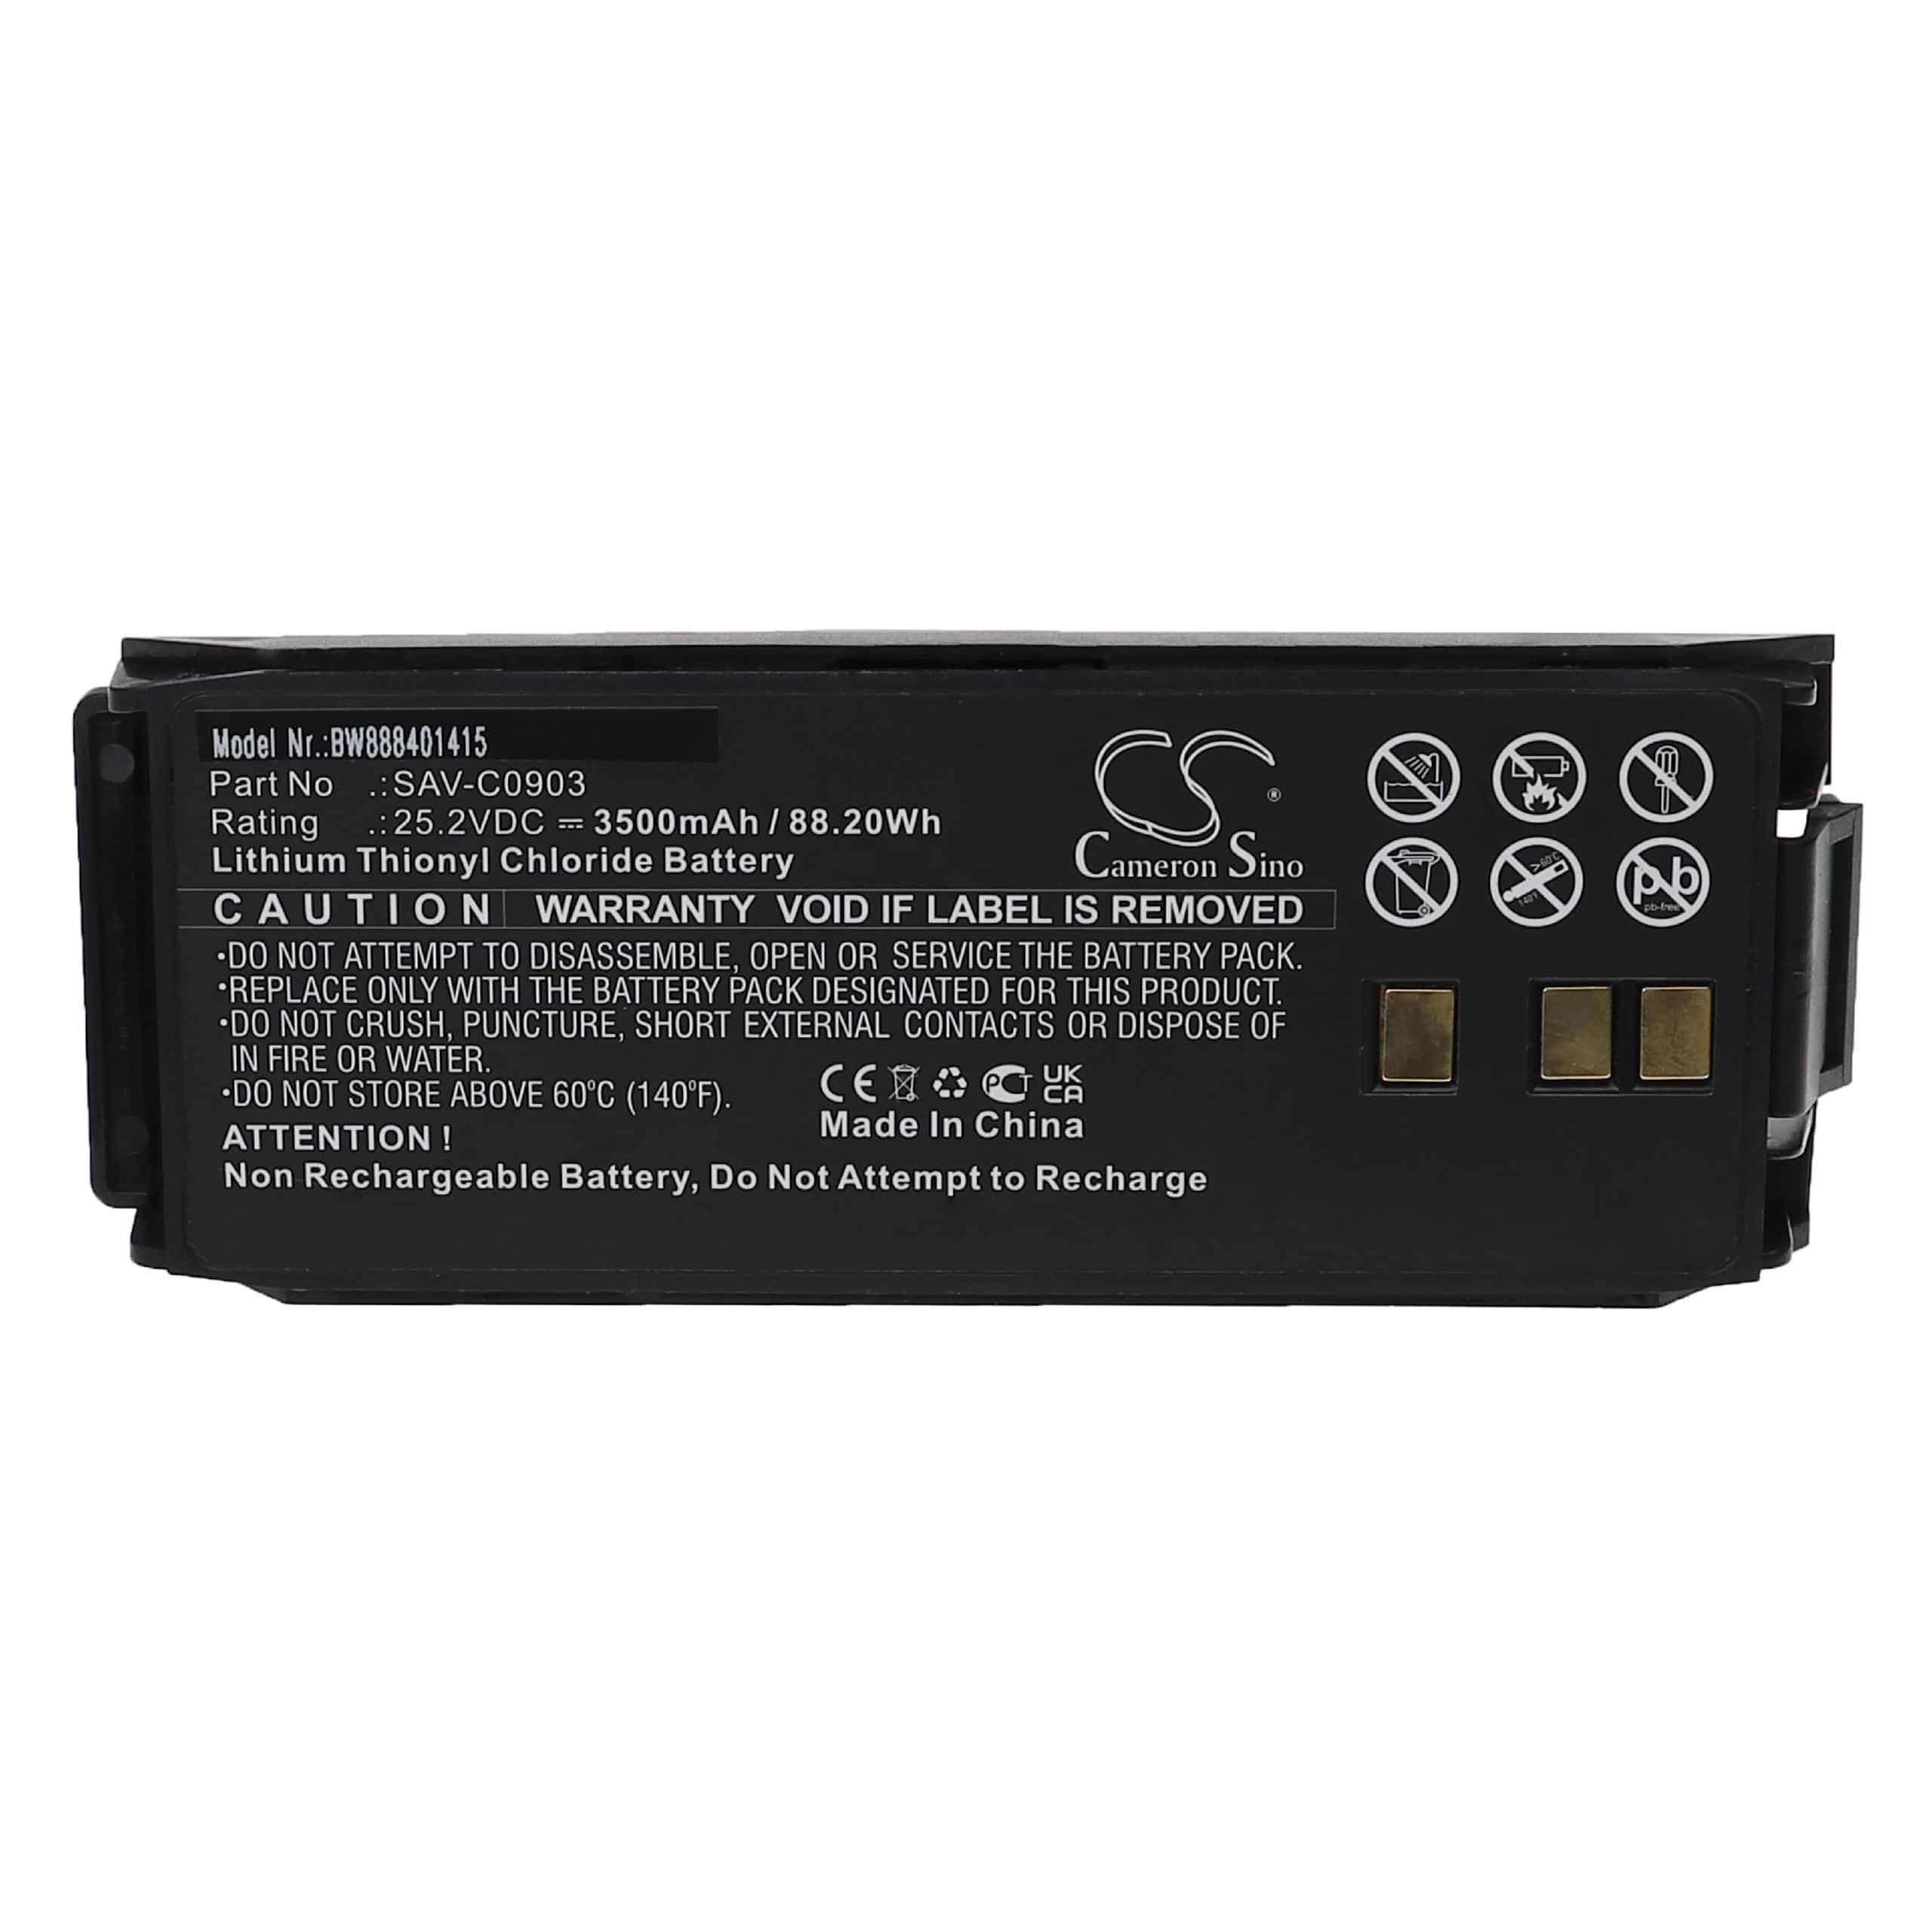 Batterie als Ersatz für Saver One SAV-C0903 - 3500mAh 25,2V Li-SOCl2